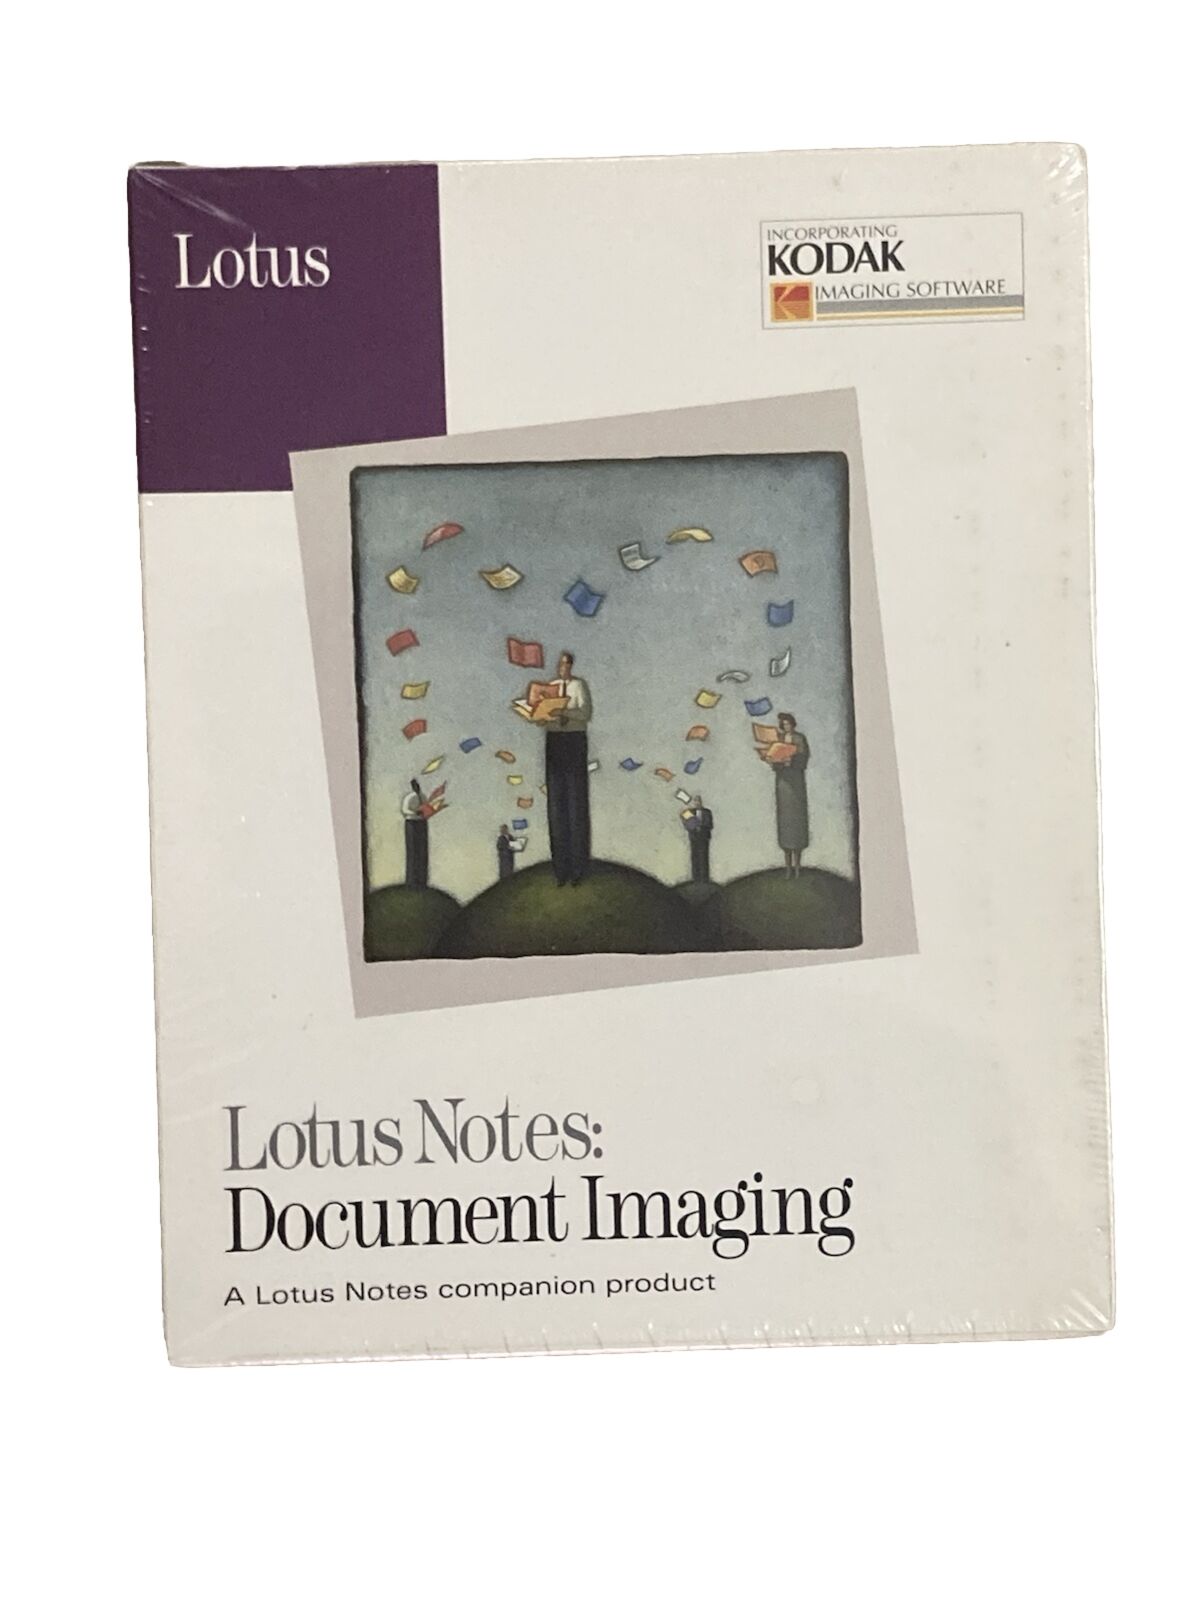 Lotus Notes Document Imaging Incorporating Kodak imaging Software 1992 Sealed